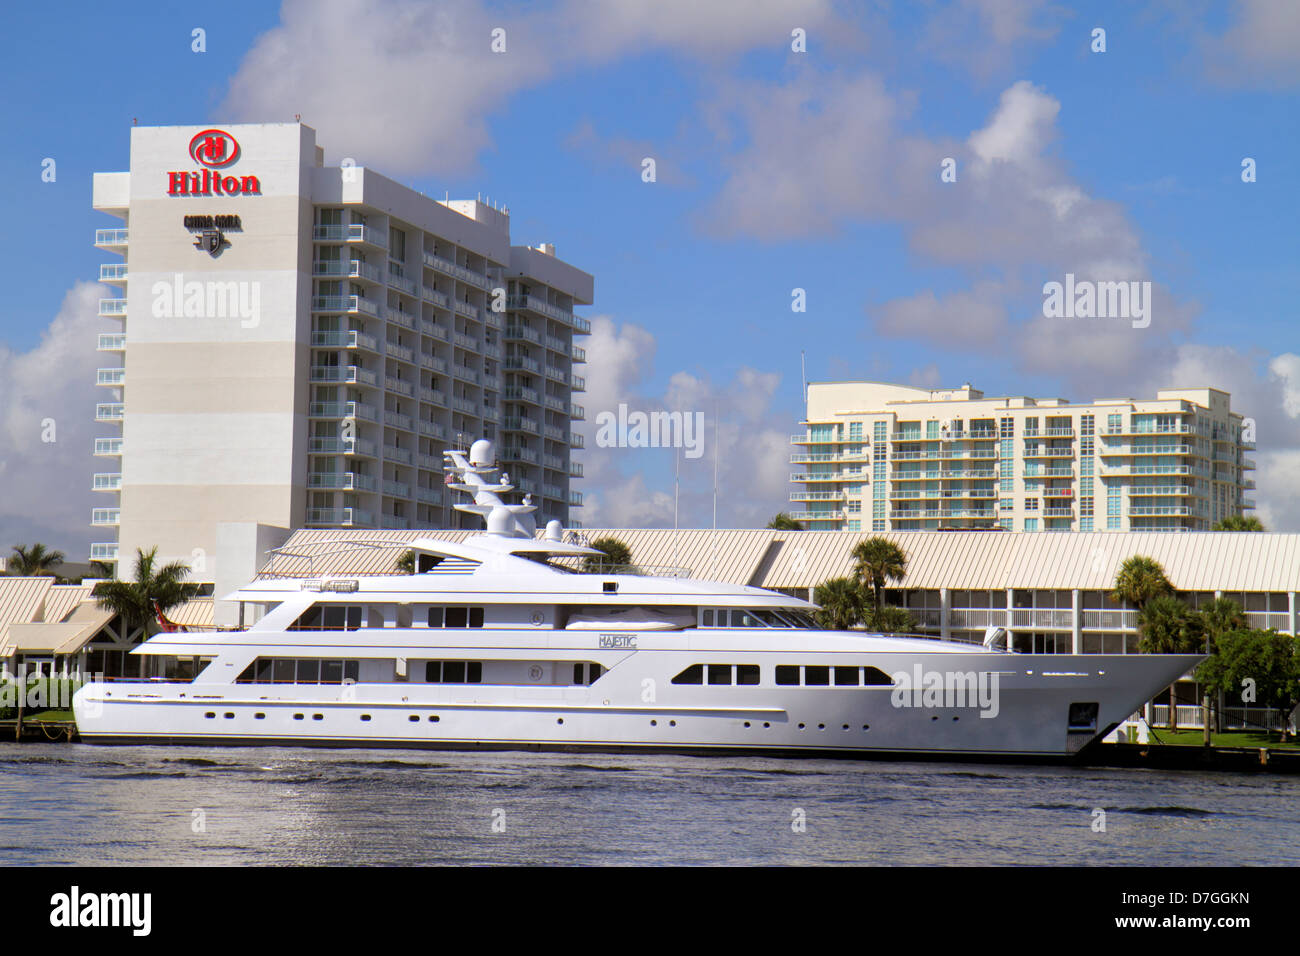 Ft. Fort Lauderdale Florida,Intracoastal Hilton Fort Lauderdale,hotel,mega yacht,super,large,luxury,FL120929083 Stock Photo